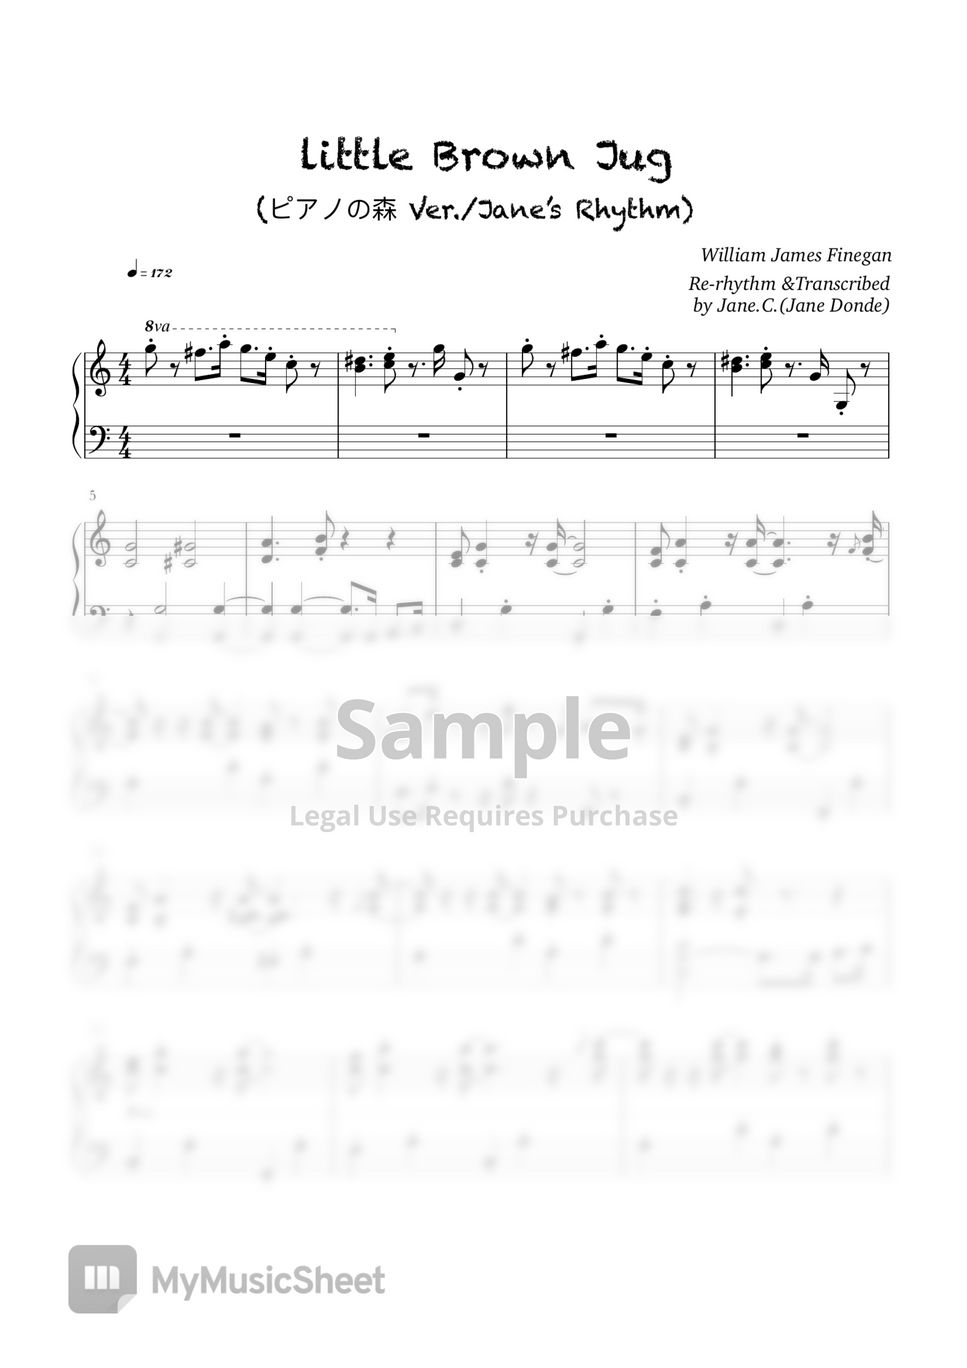 Joseph Eastburn Winner - Little Brown Jug - Forest of Piano Ver. (Re-rhythm) by Jane.C.(Jane Donde)